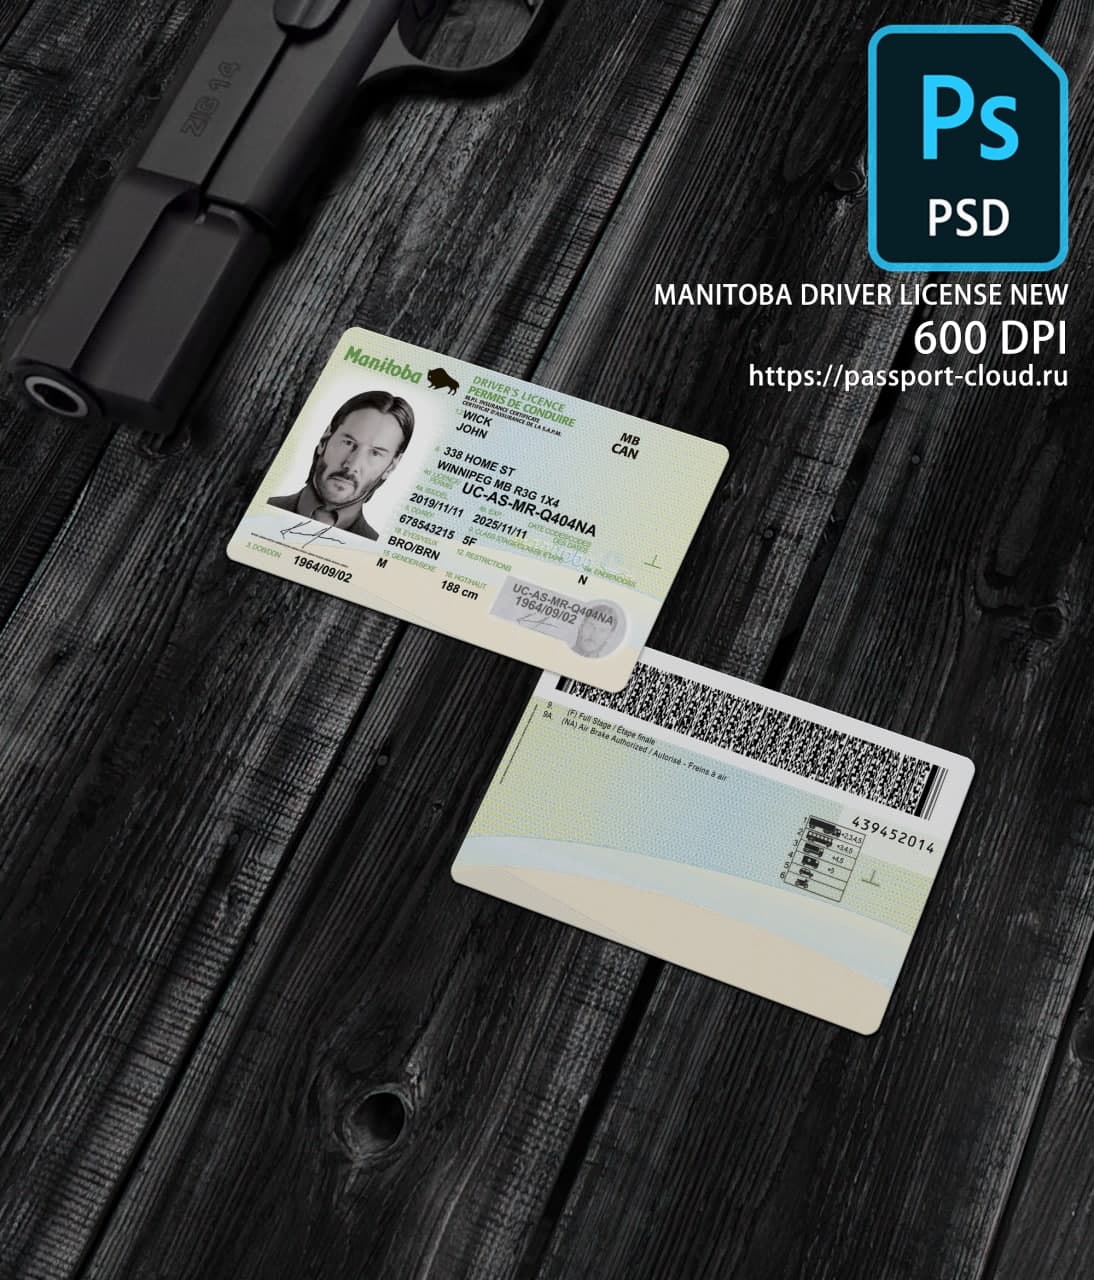 Manitoba Driver License NEW1